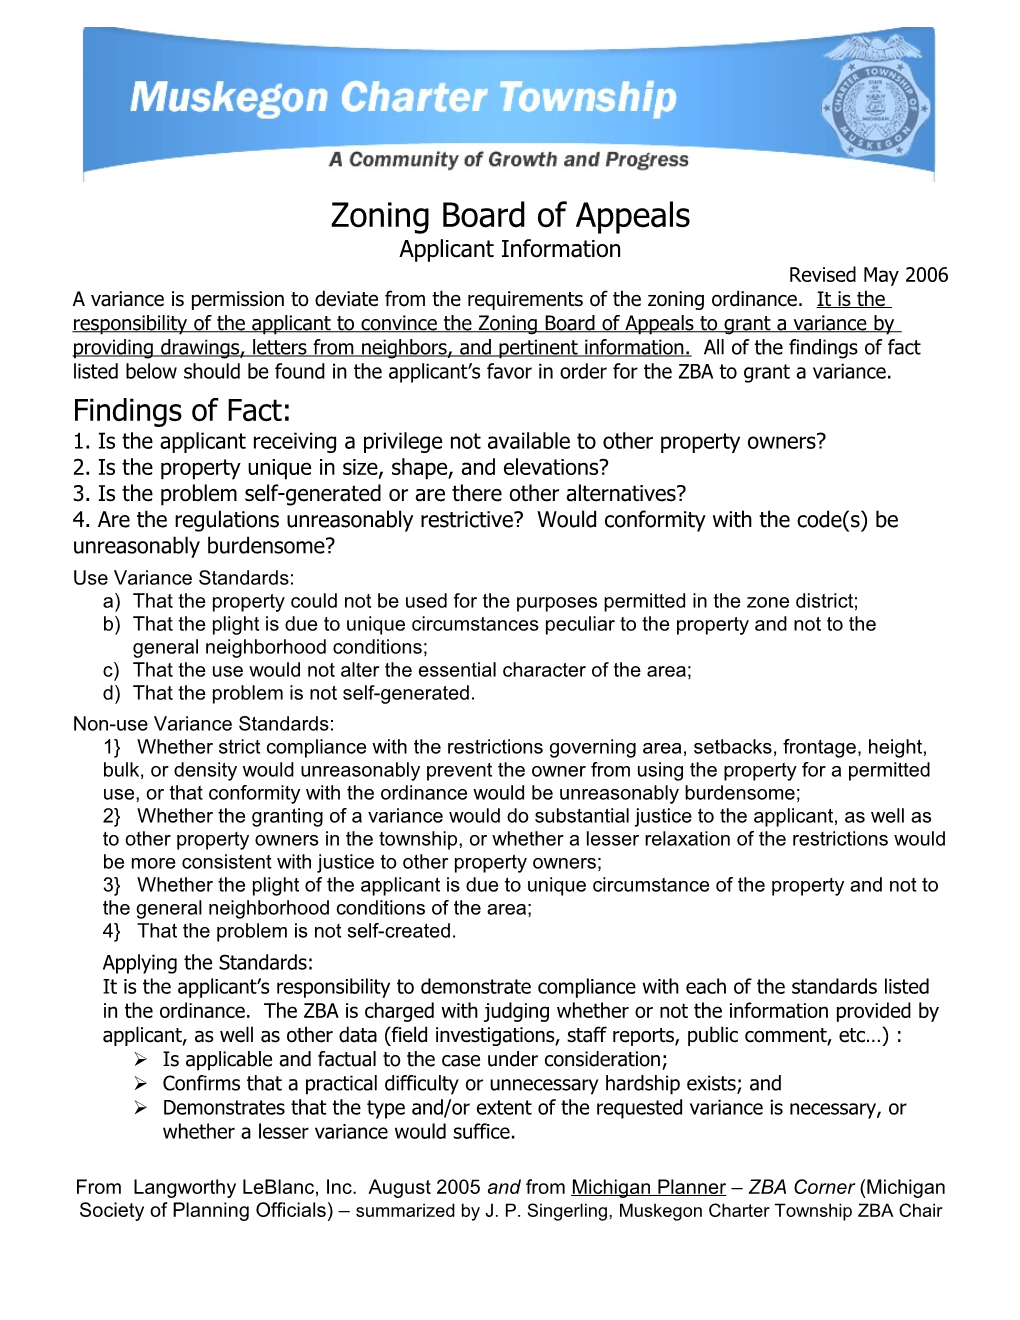 Zoning Board of Appeals s8